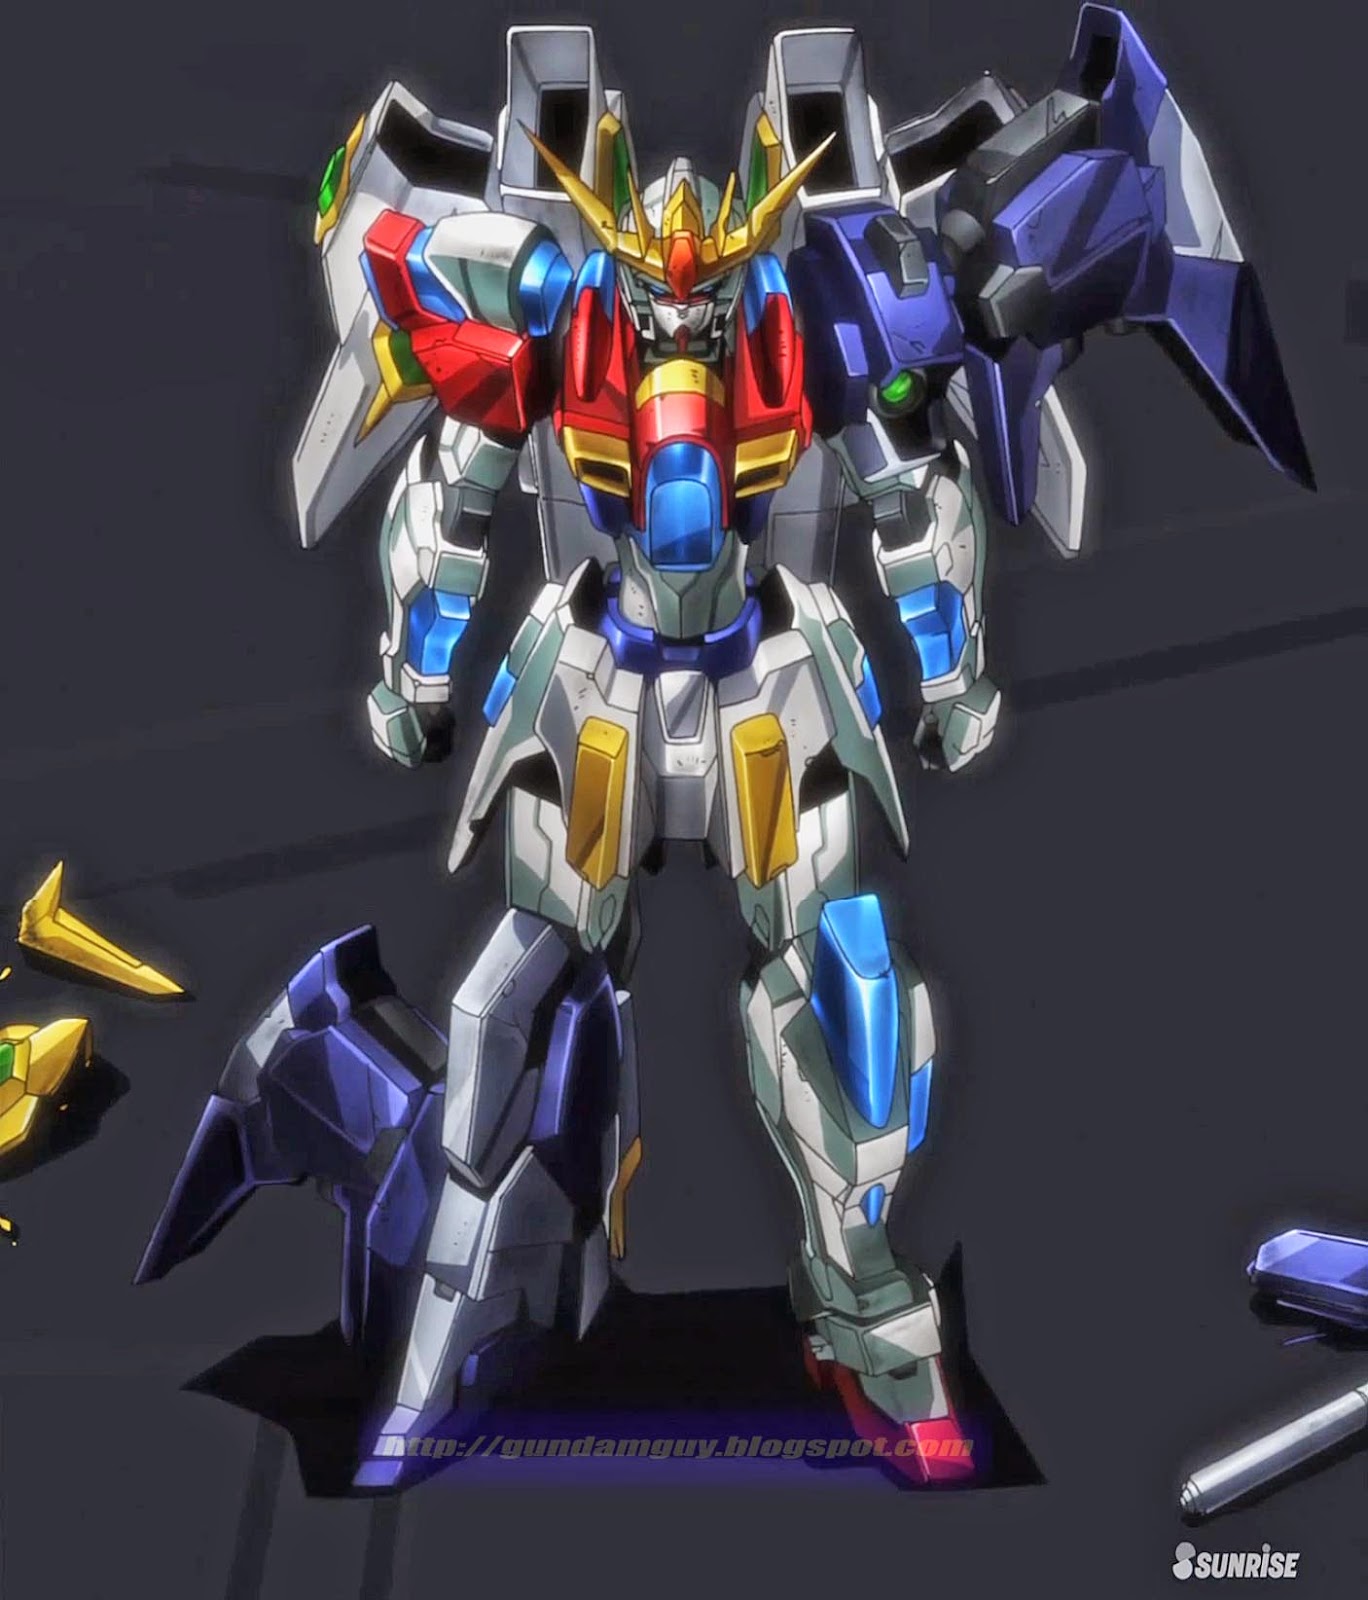 Gundam Build Fighters wallpaper, Anime, HQ Gundam Build Fighters pictureK Wallpaper 2019